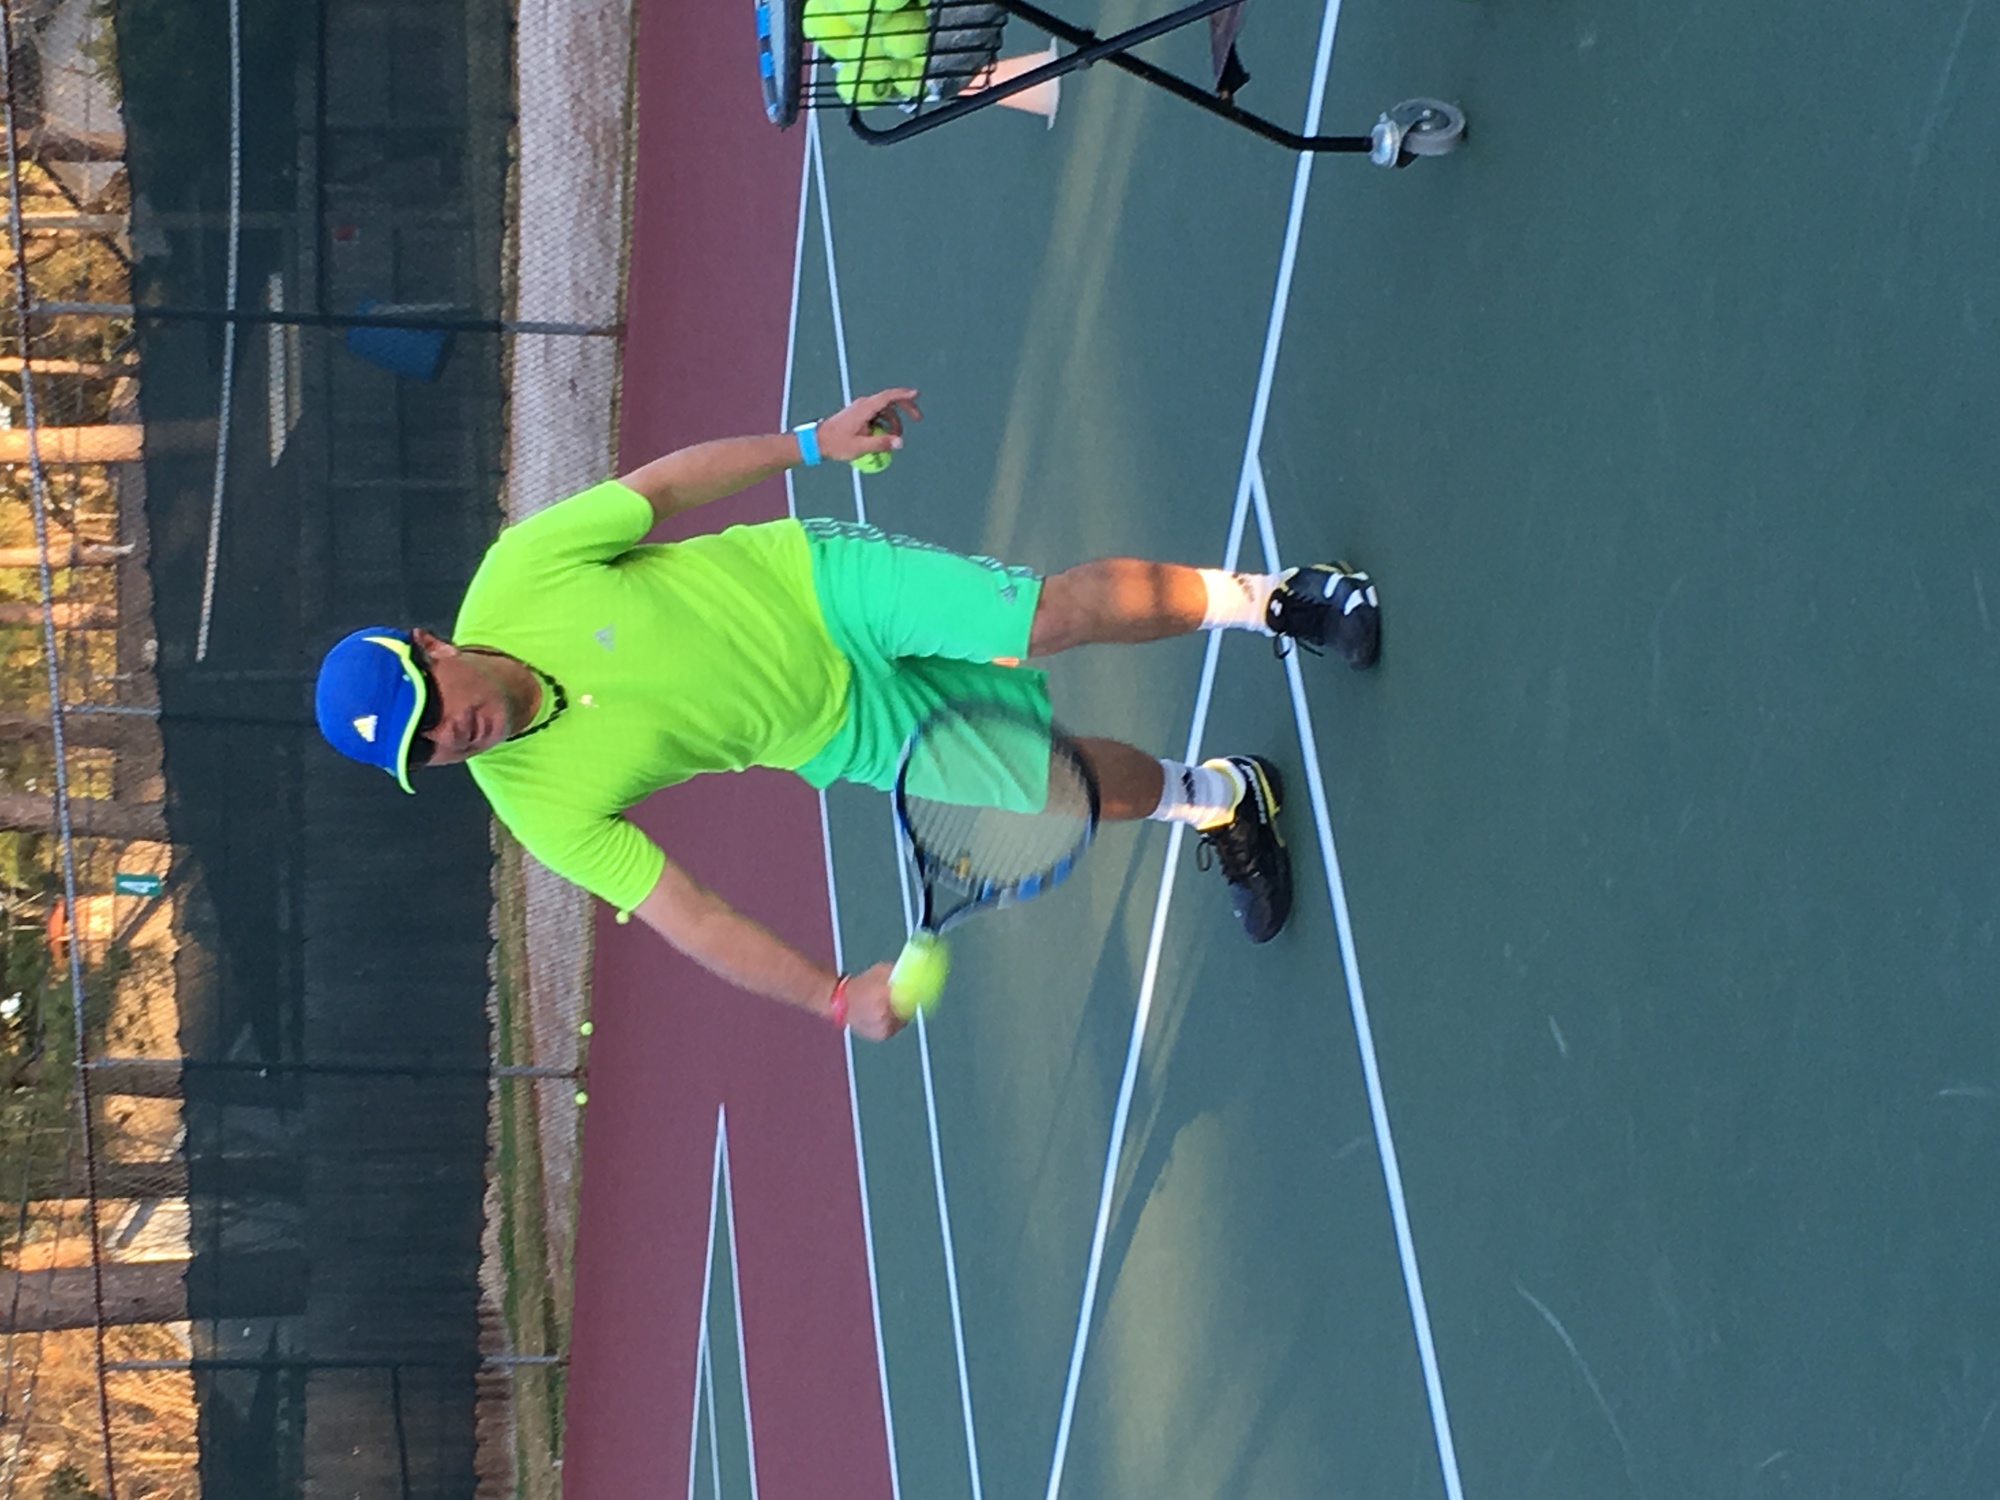 Alfredo R. teaches tennis lessons in Houston, TX